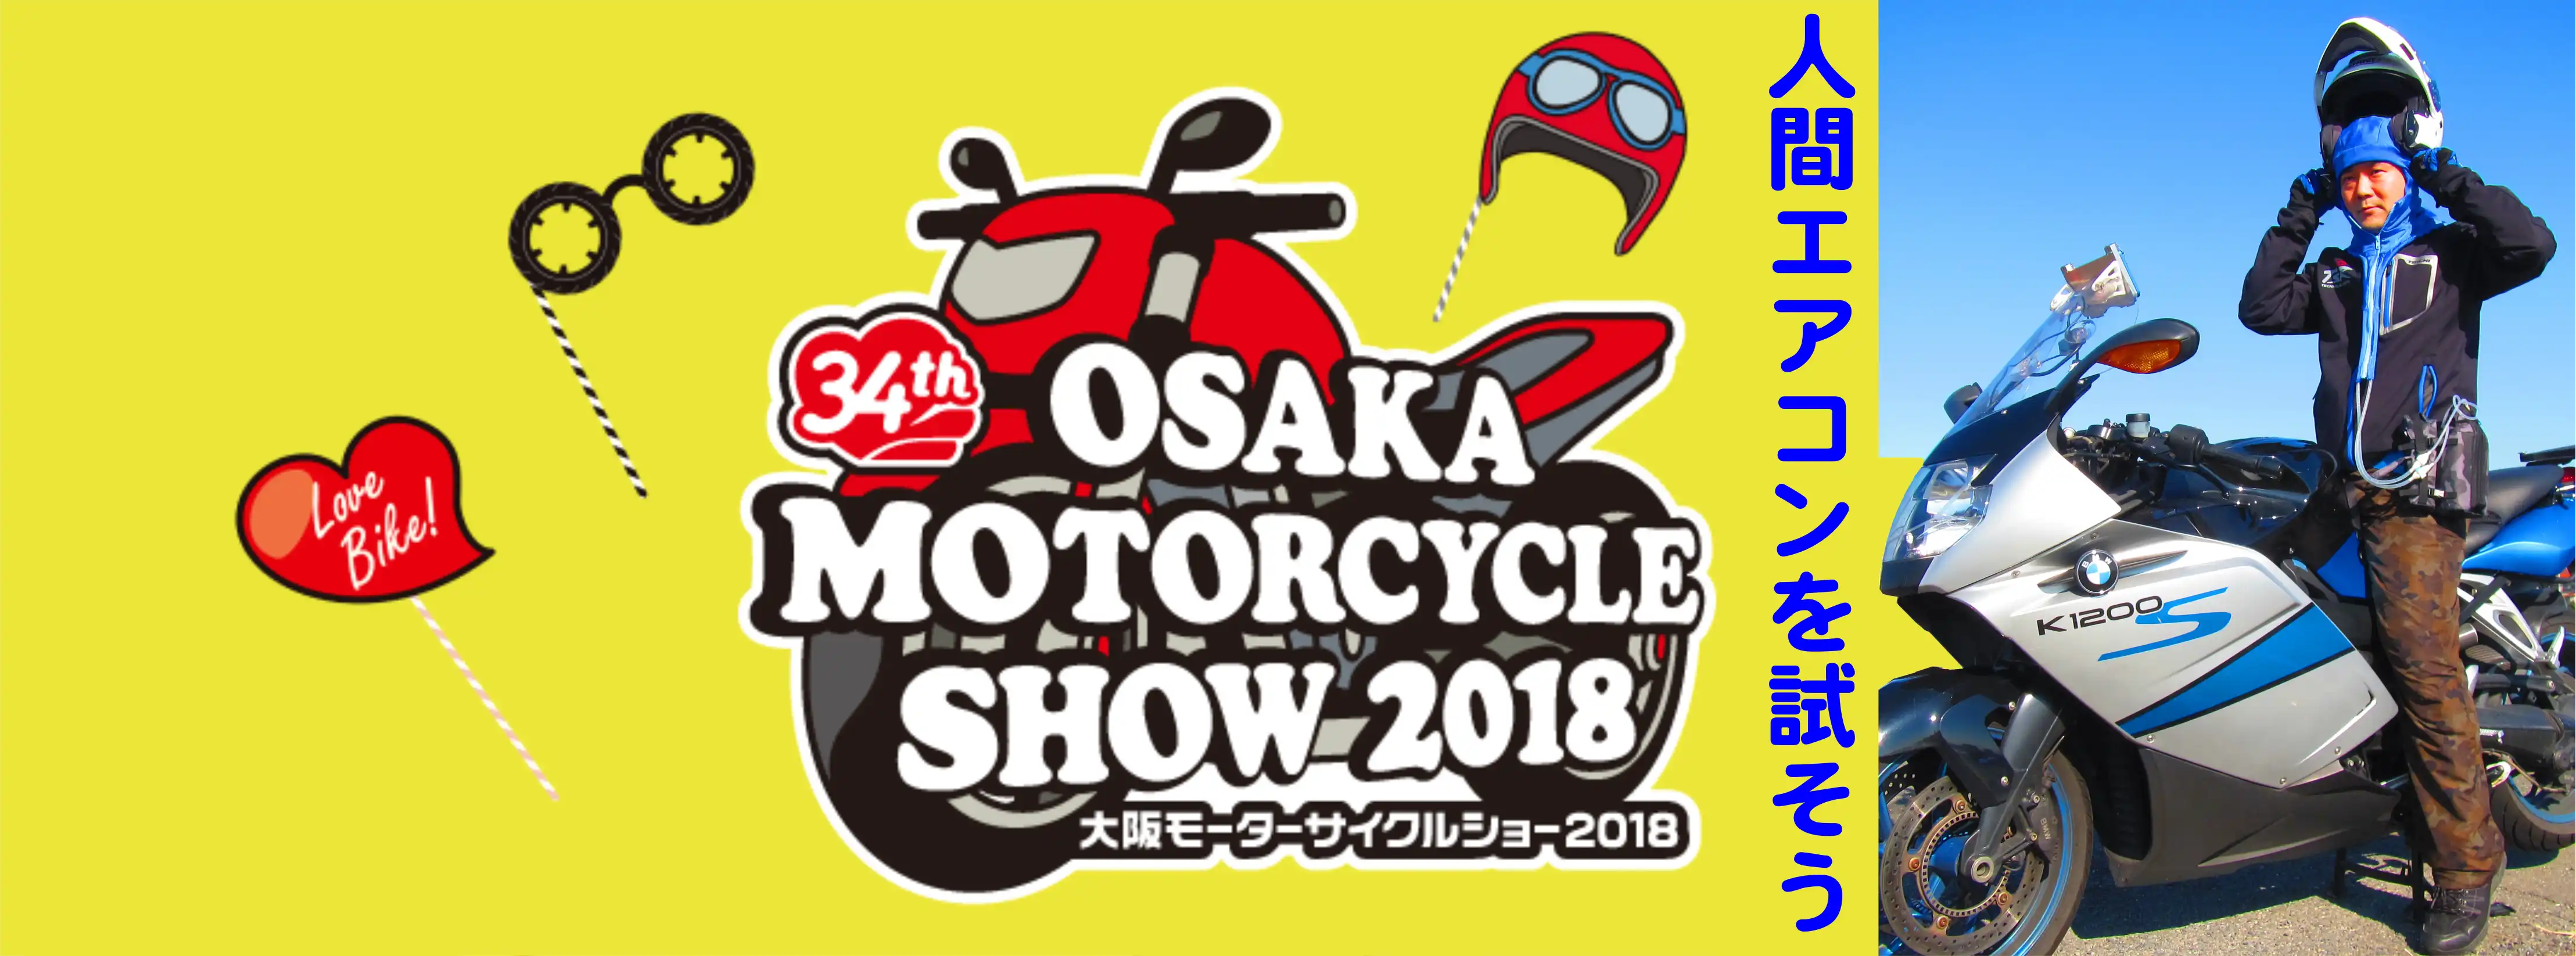 motorcycleshow2018